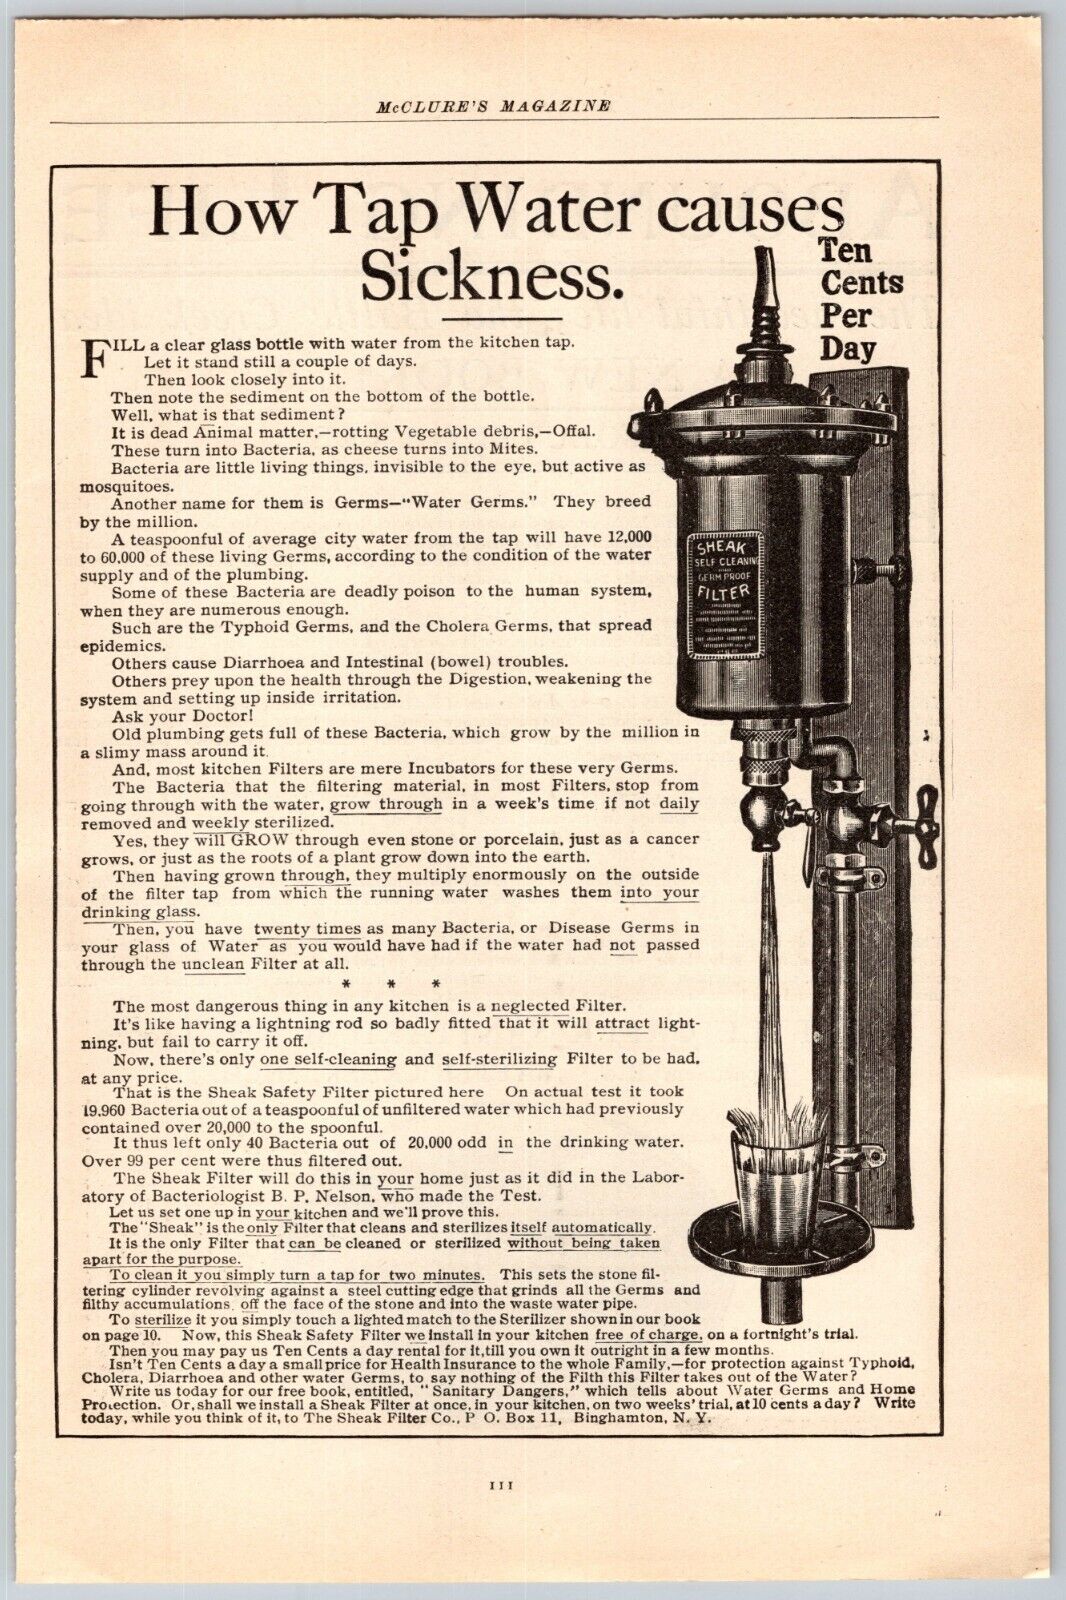 1905 Print Ad Sheak Filter Co Binghampton NY How Tap Water Causes Sickness